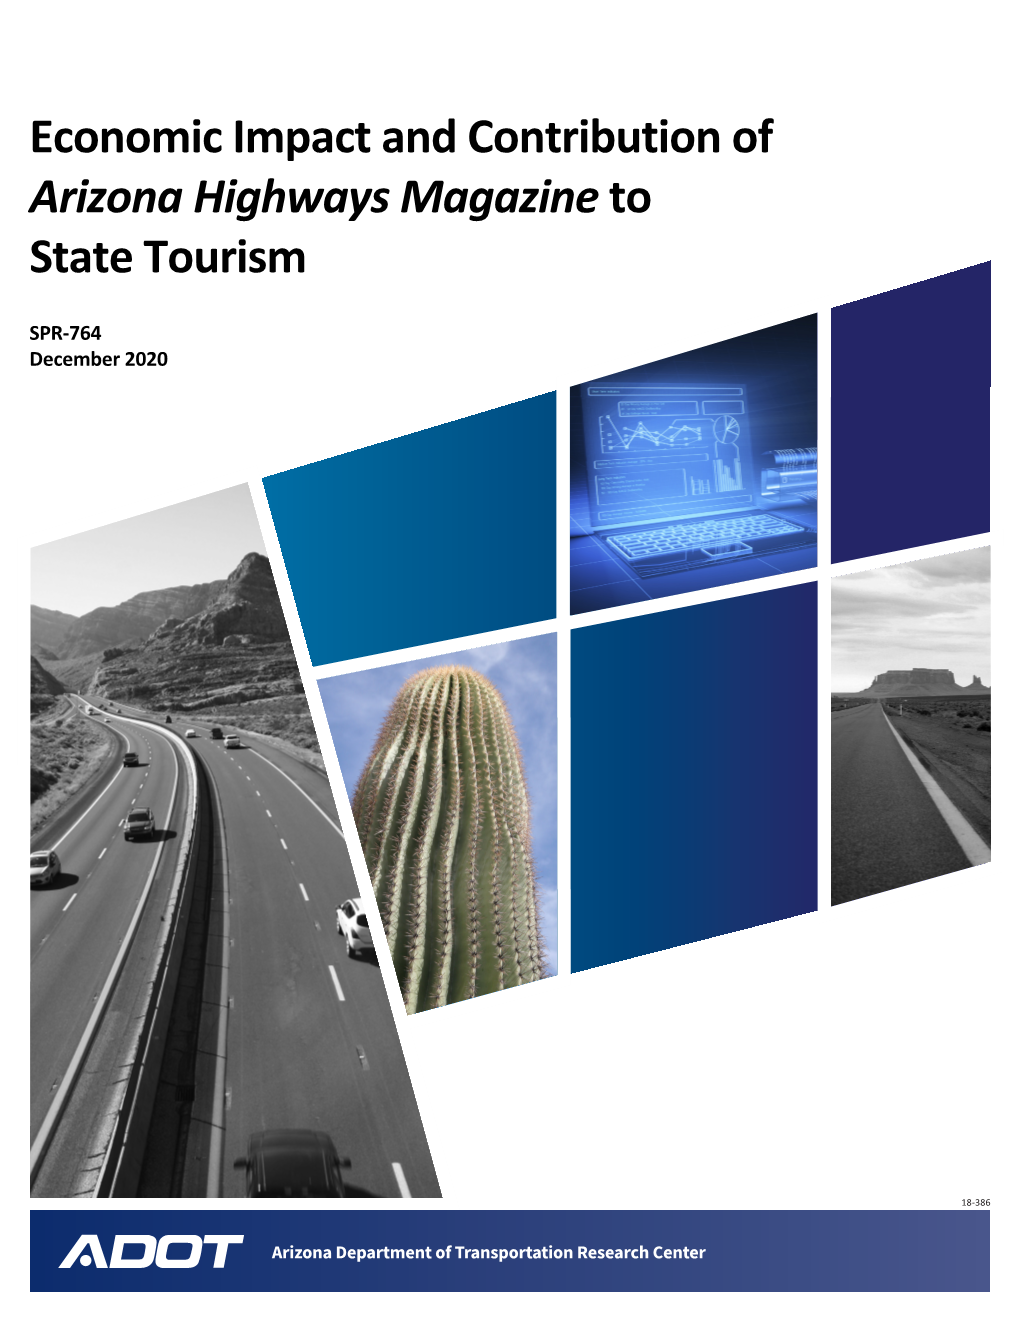 Economic Impact and Contribution of Arizona Highways Magazine to State Tourism